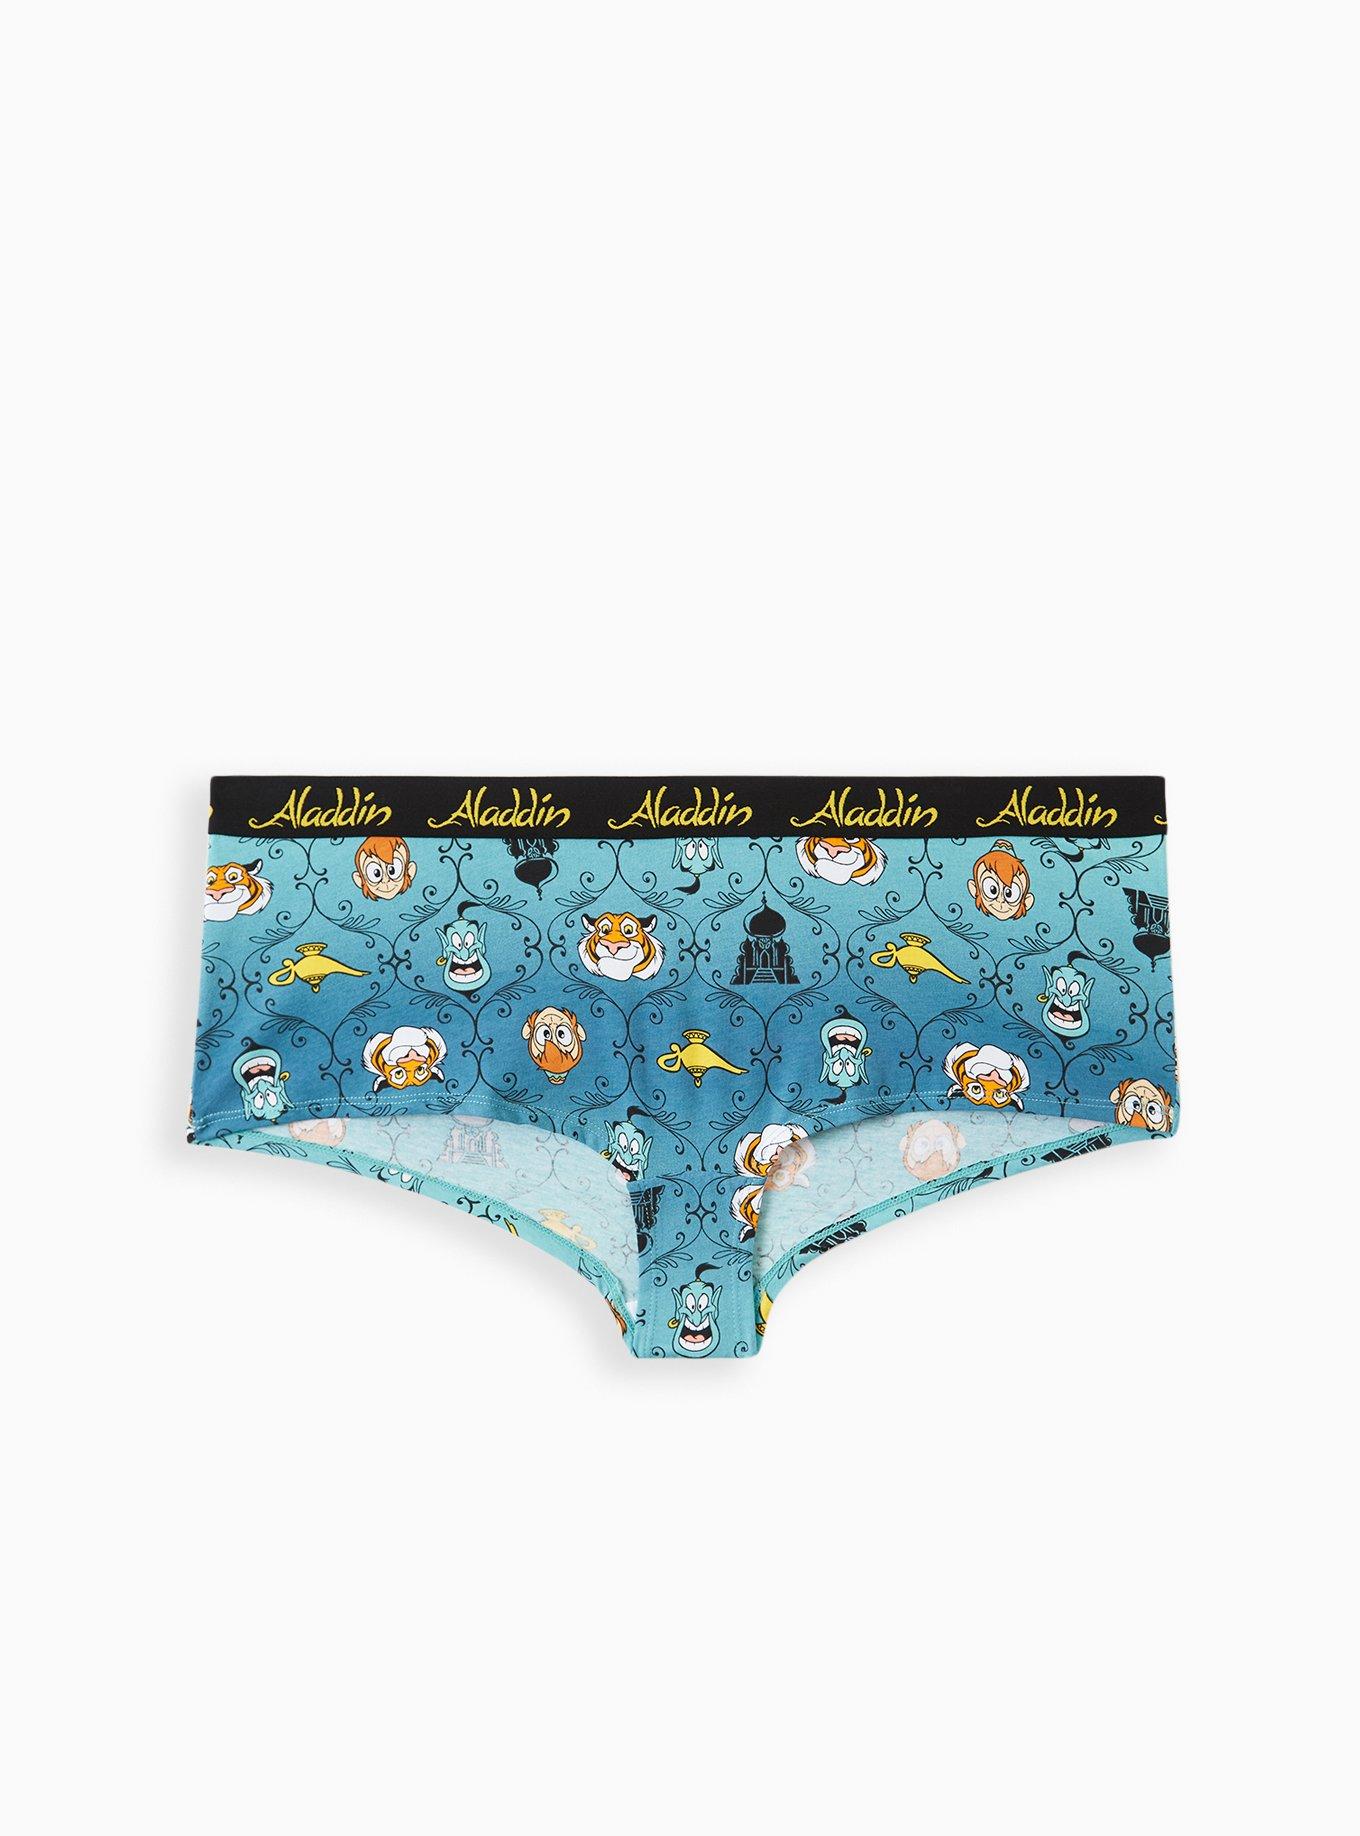 Plus Size - Disney Aladdin Sidekicks Cotton Boyshort Panty - Torrid